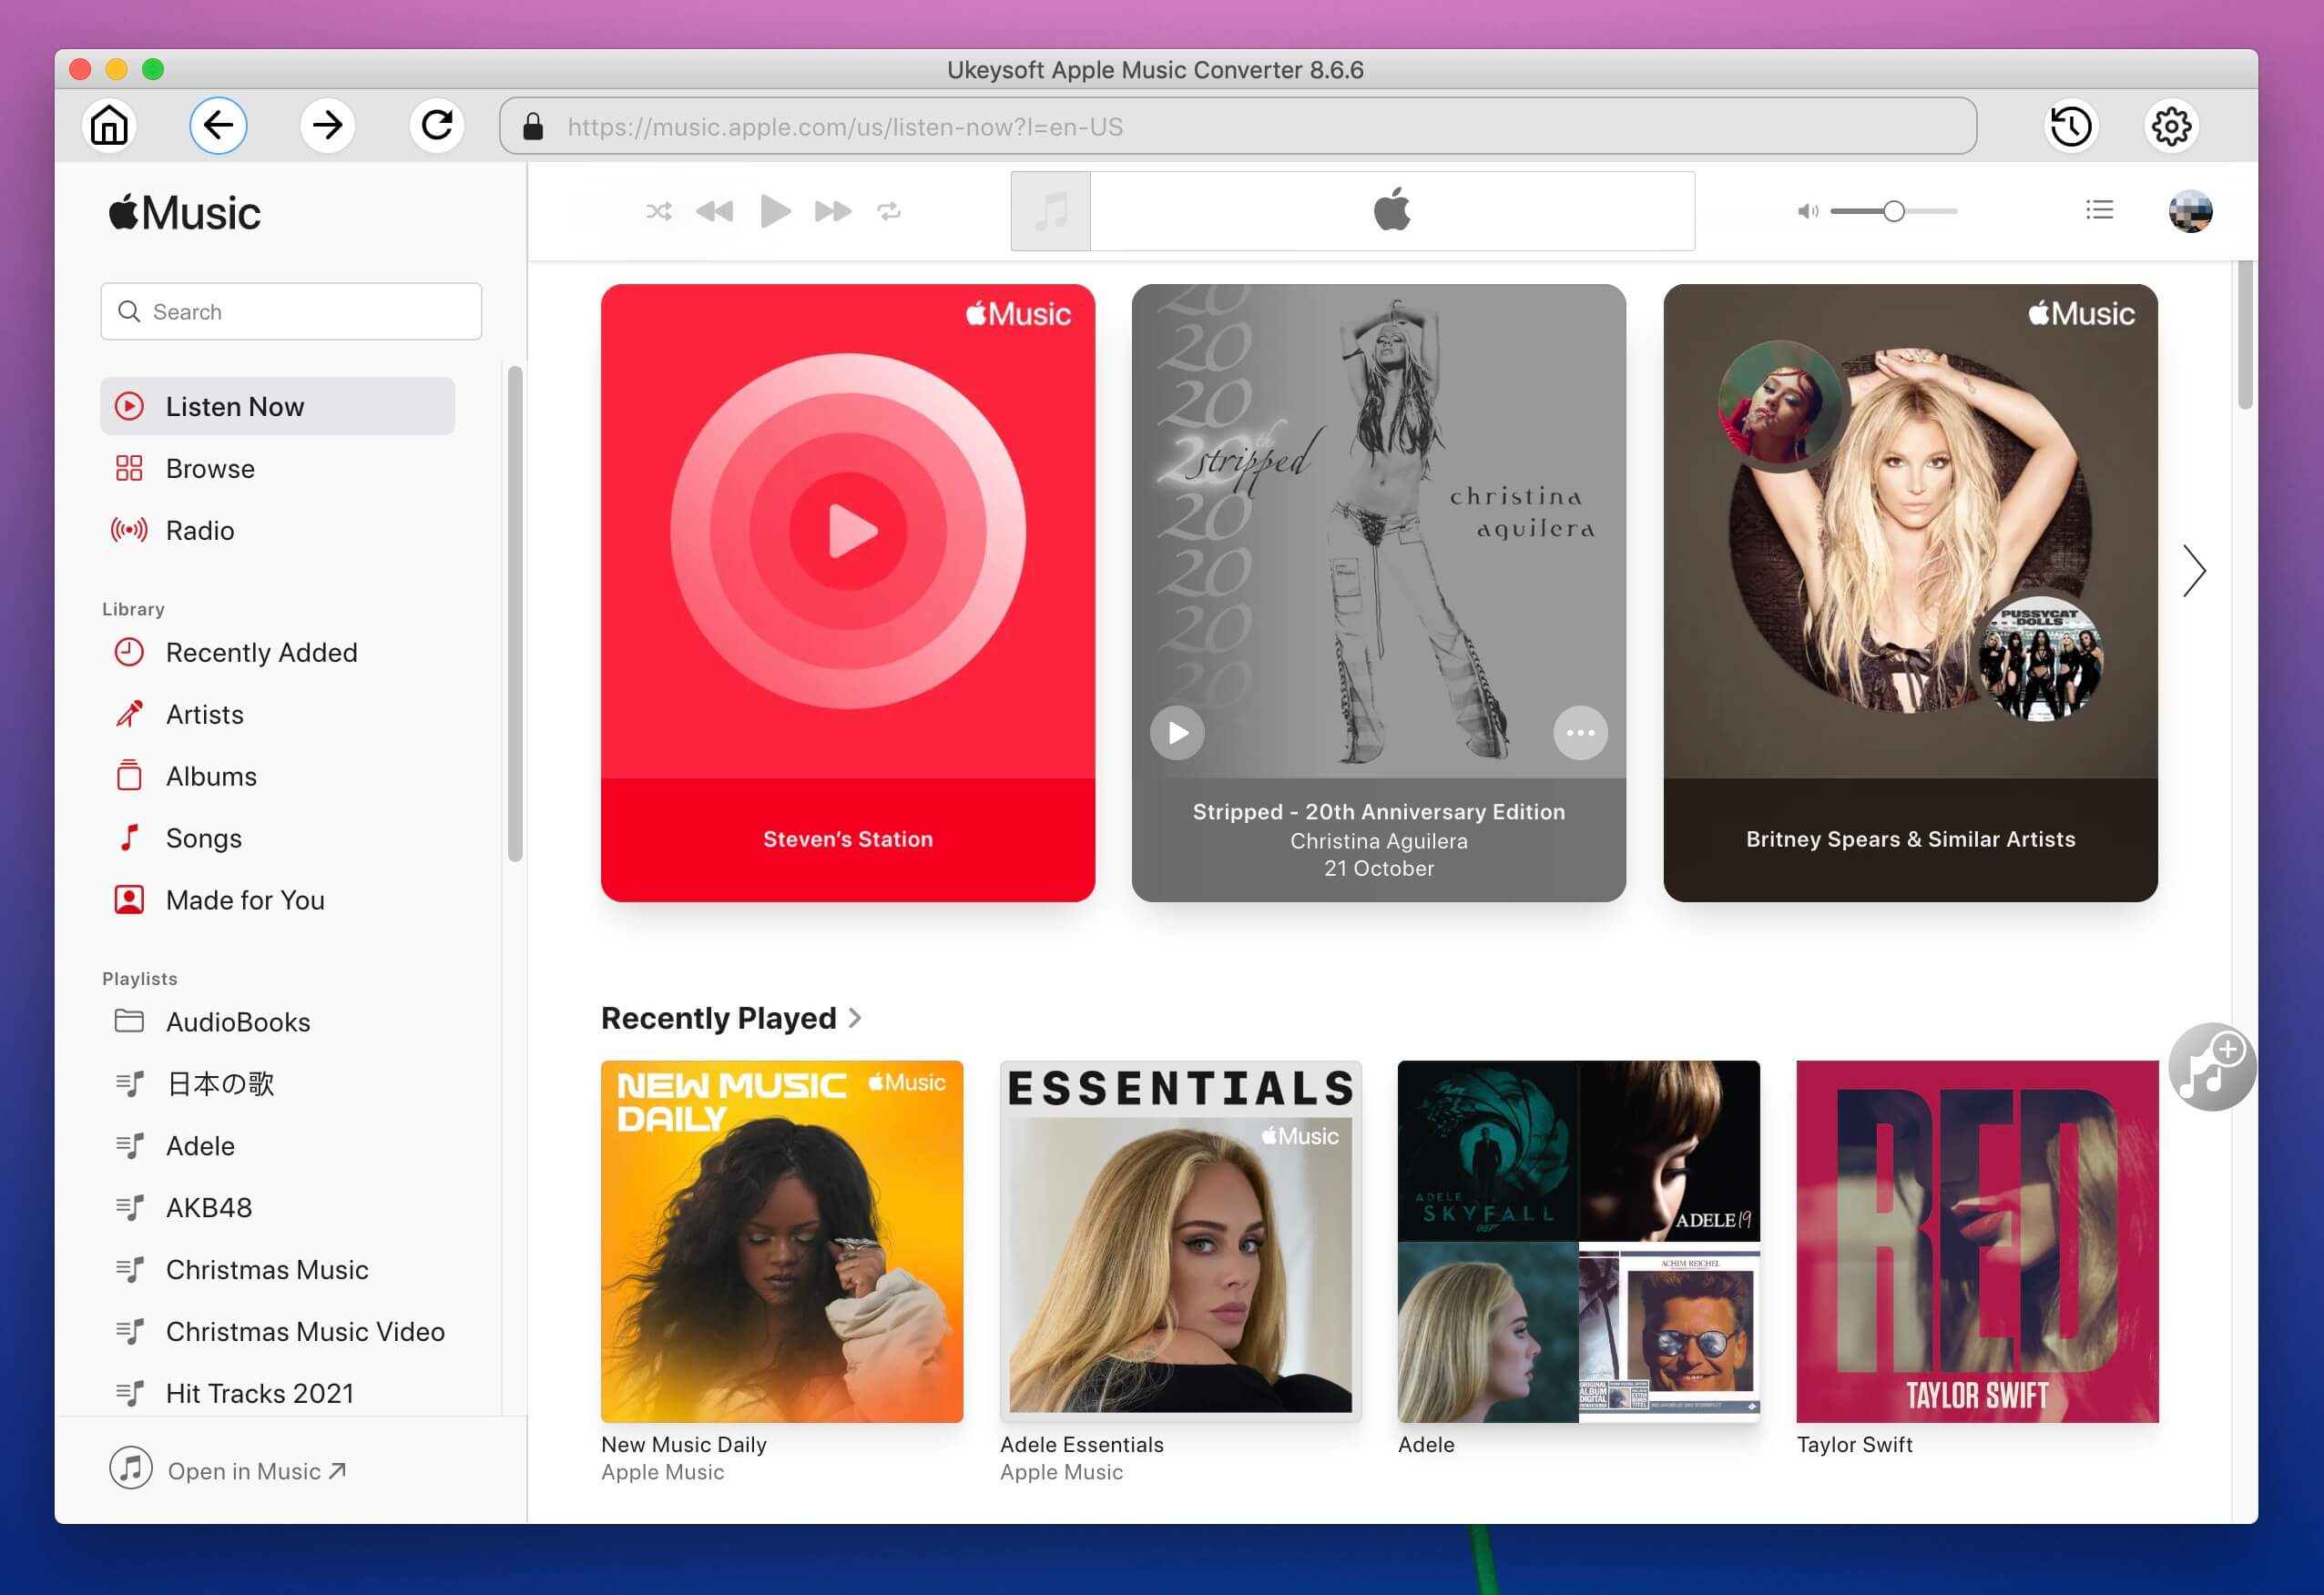 launch Apple Music Converter